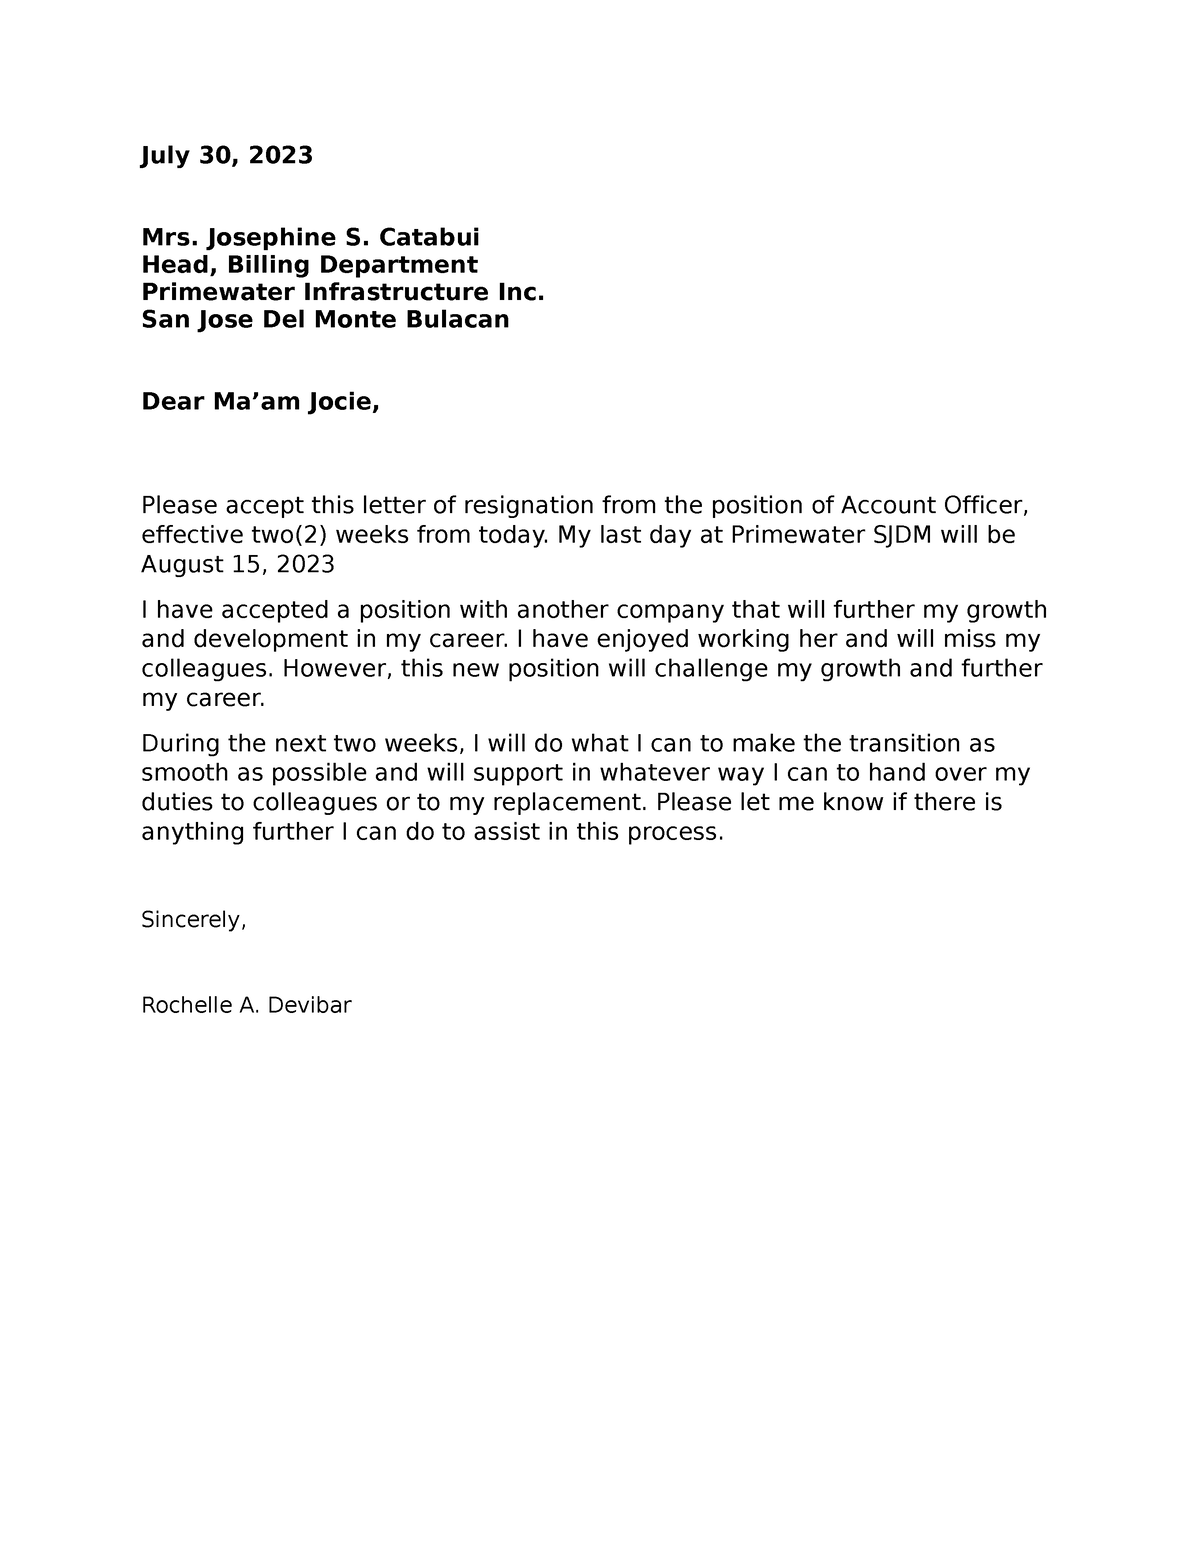 Resignation letter - ccscsa - July 30, 2023 Mrs. Josephine S. Catabui ...